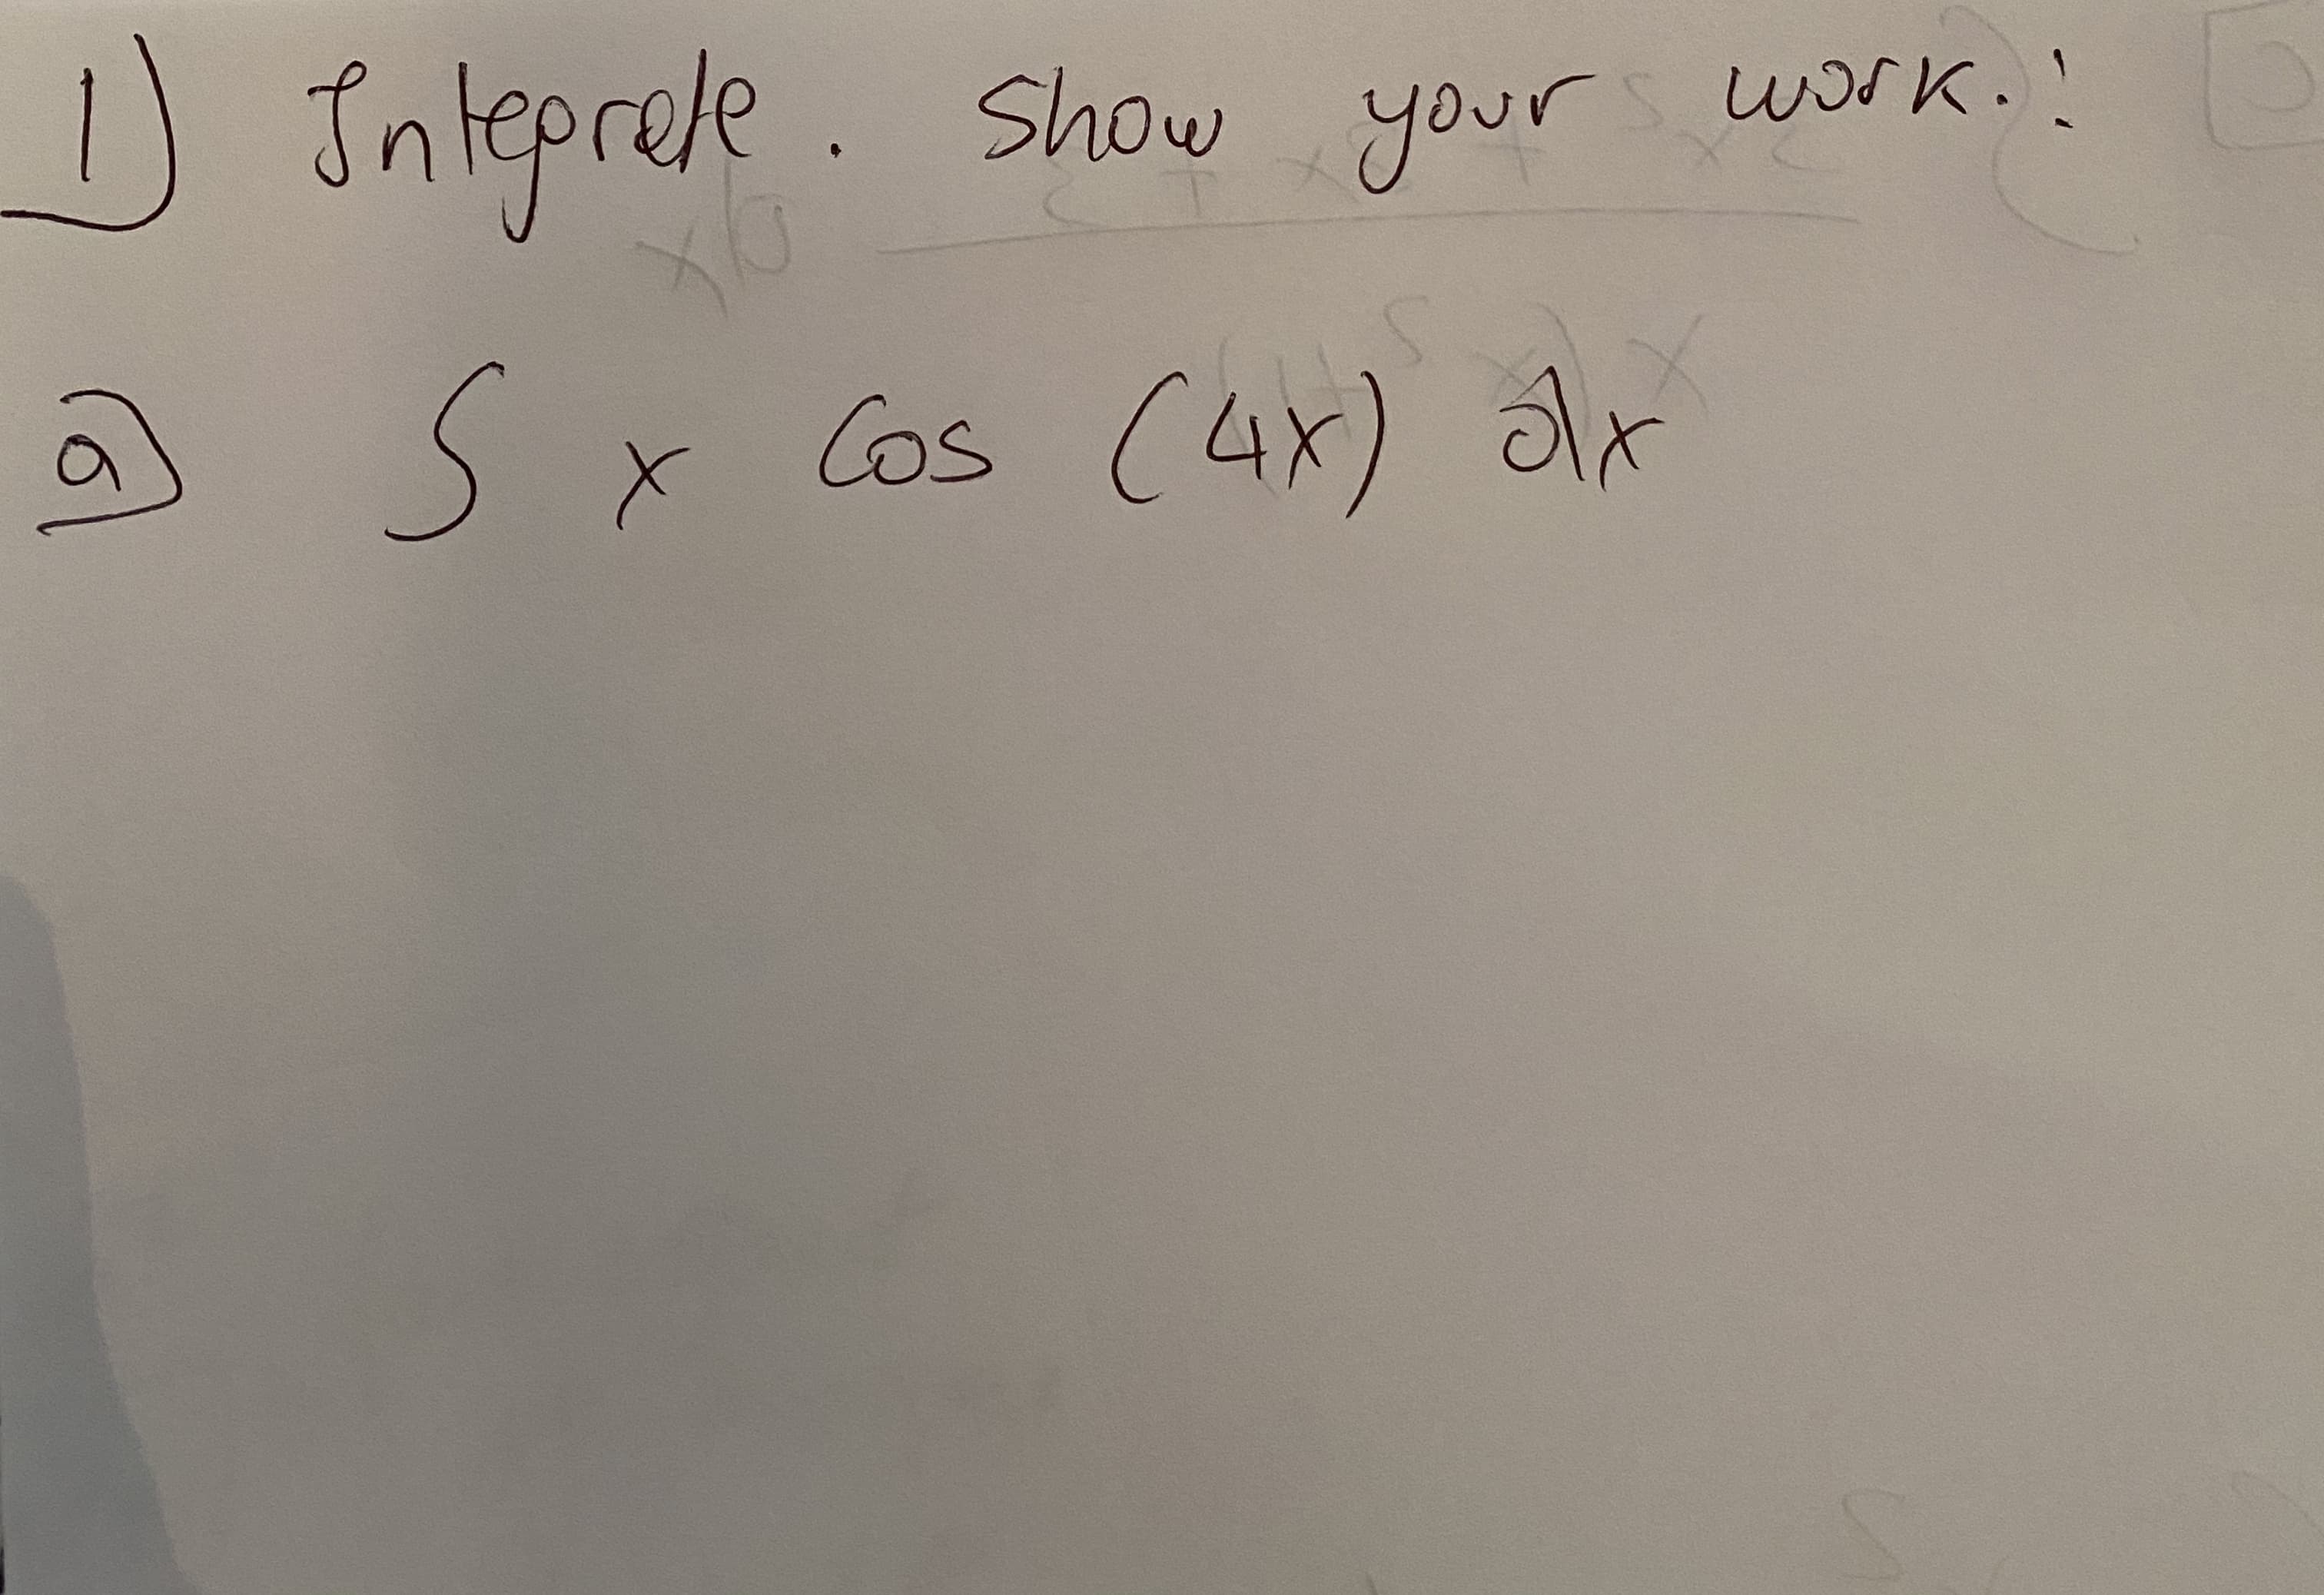 Inteprele .
2. Show yours work.
S x Cos (4x) dx
